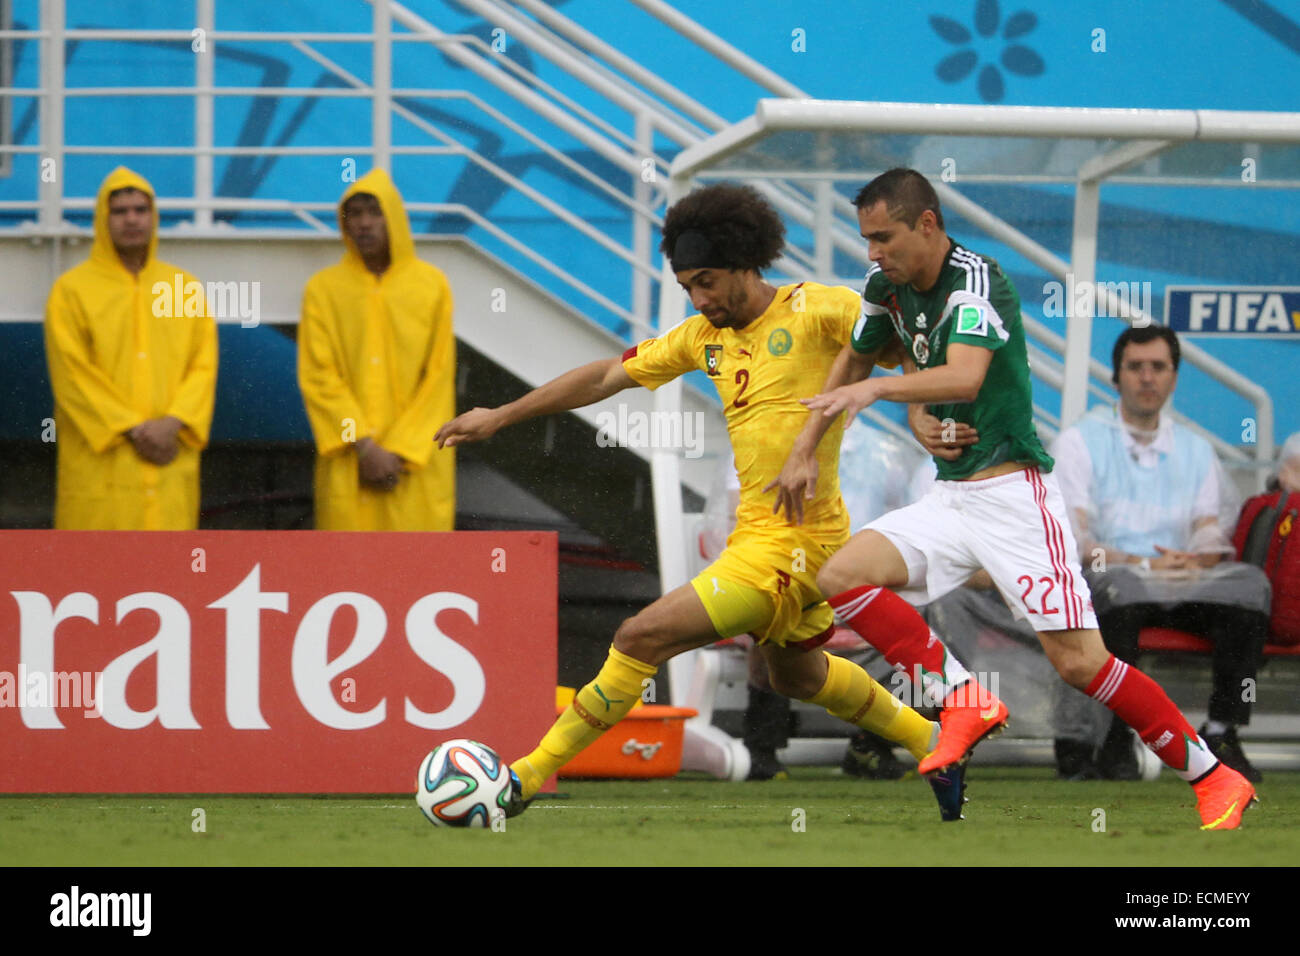 2014 FIFA World Cup - Group A match, Mexico 1 - 0 Cameroon, held at Estadio das Dunas, Natal  Featuring: Paul Aguilar Where: Natal, RN, Brazil When: 13 Jun 2014 Stock Photo